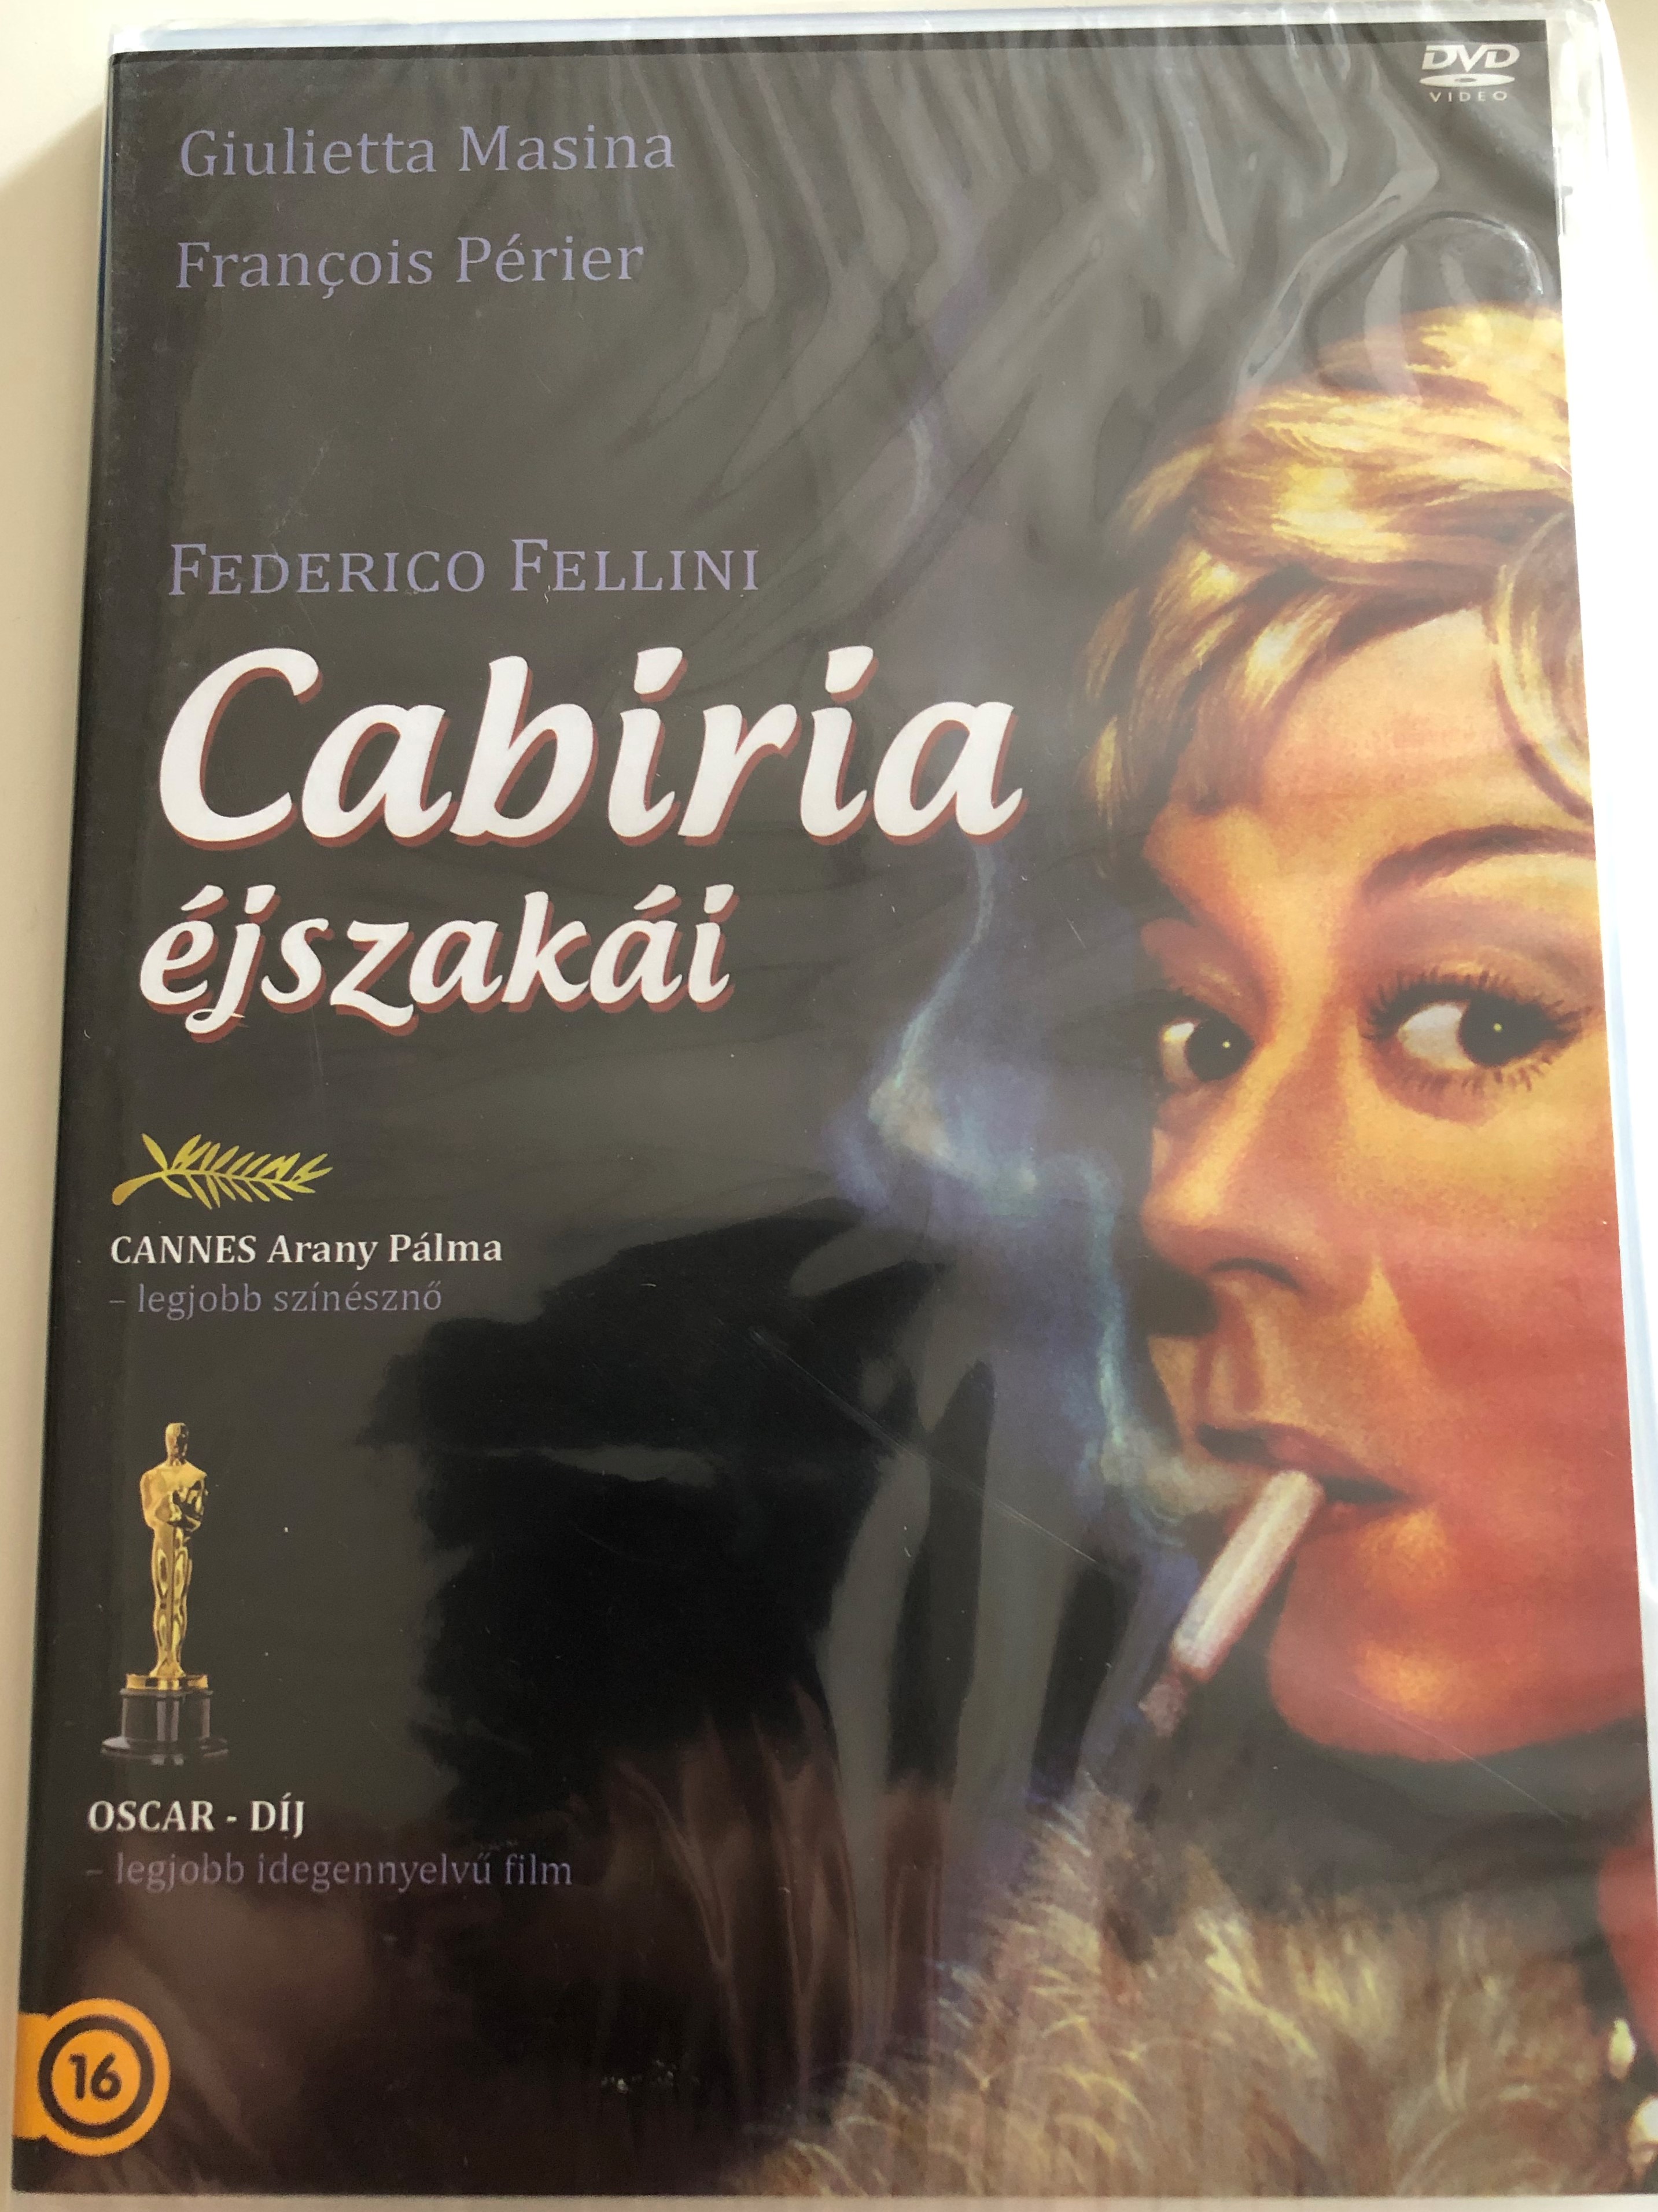 nights-of-cabiria-dvd-1957-cabiria-jszak-i-le-notti-di-cabiria-directed-by-federico-fellini-starring-giulietta-masina-fran-ois-p-rier-franca-marzi-dorian-gray-amedeo-nazzari-1-.jpg